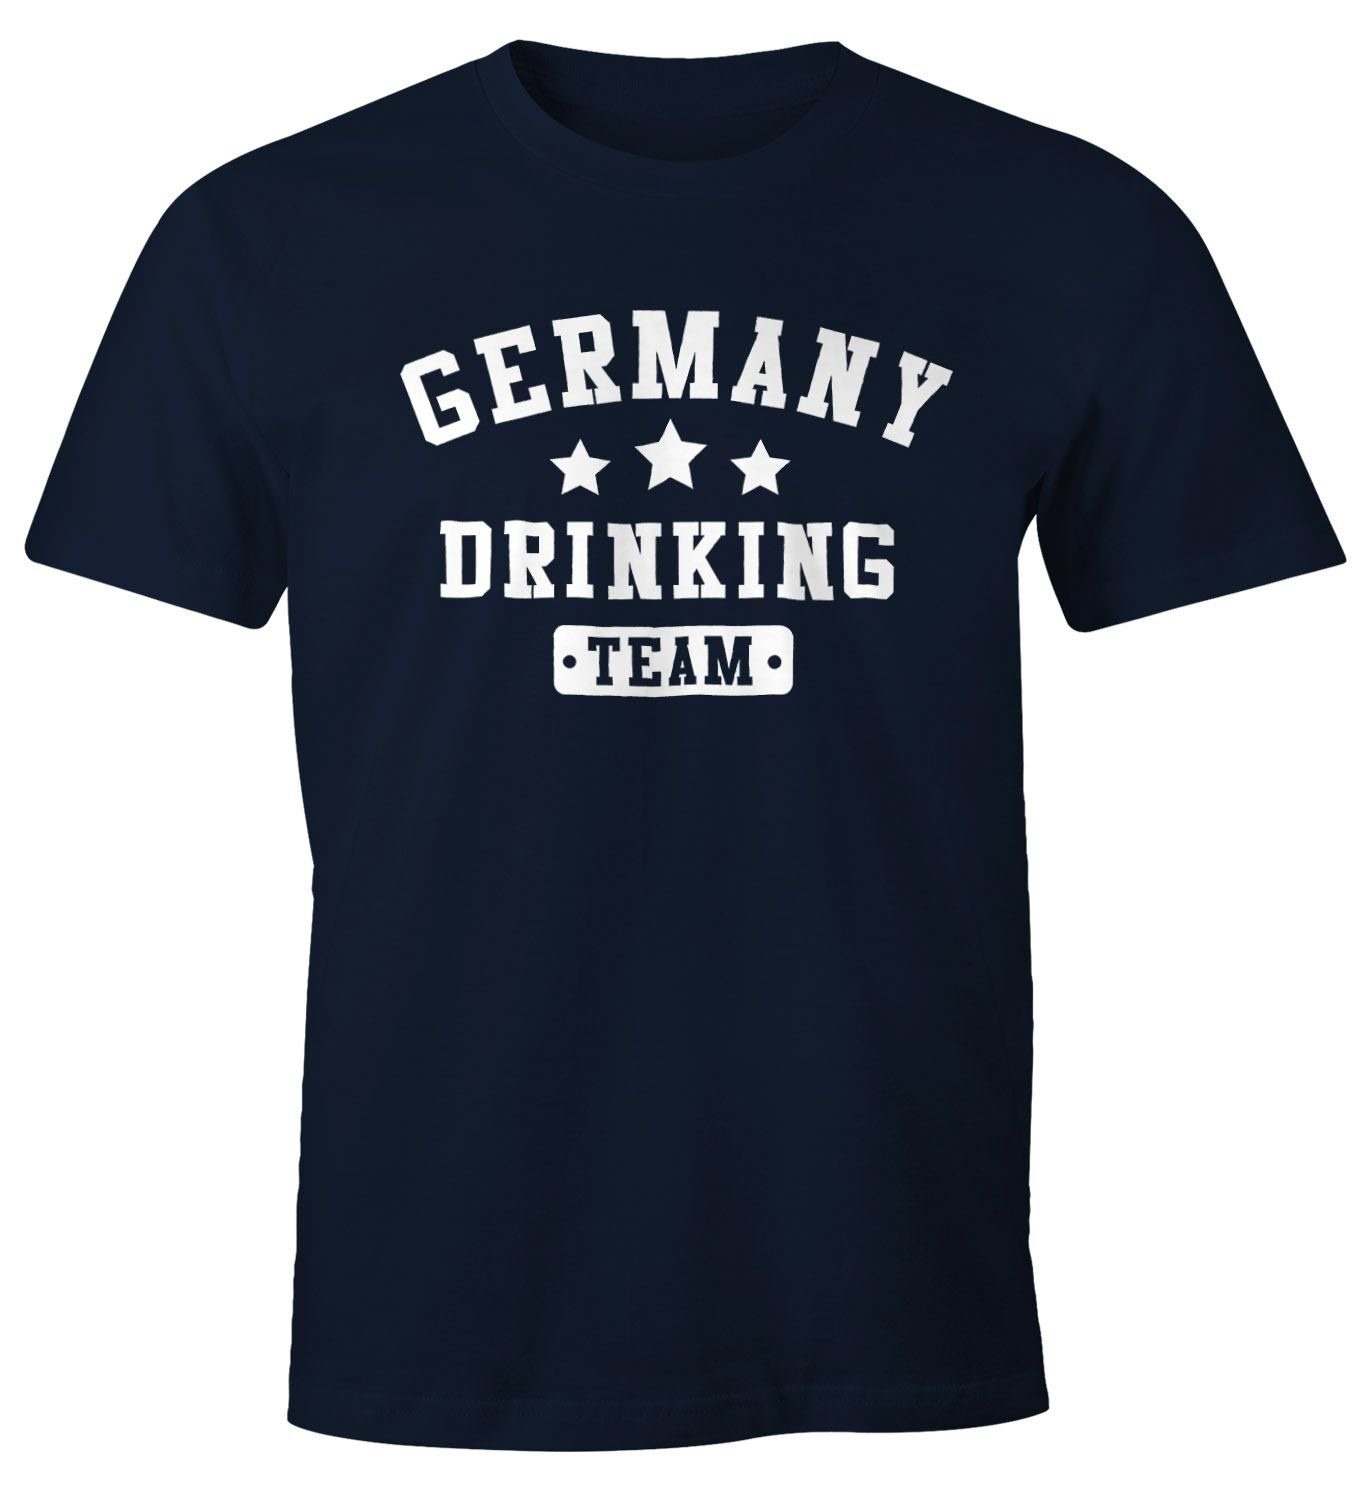 MoonWorks Print-Shirt Herren T-Shirt Germany Drinking Team Bier Fun-Shirt Moonworks® mit Print navy